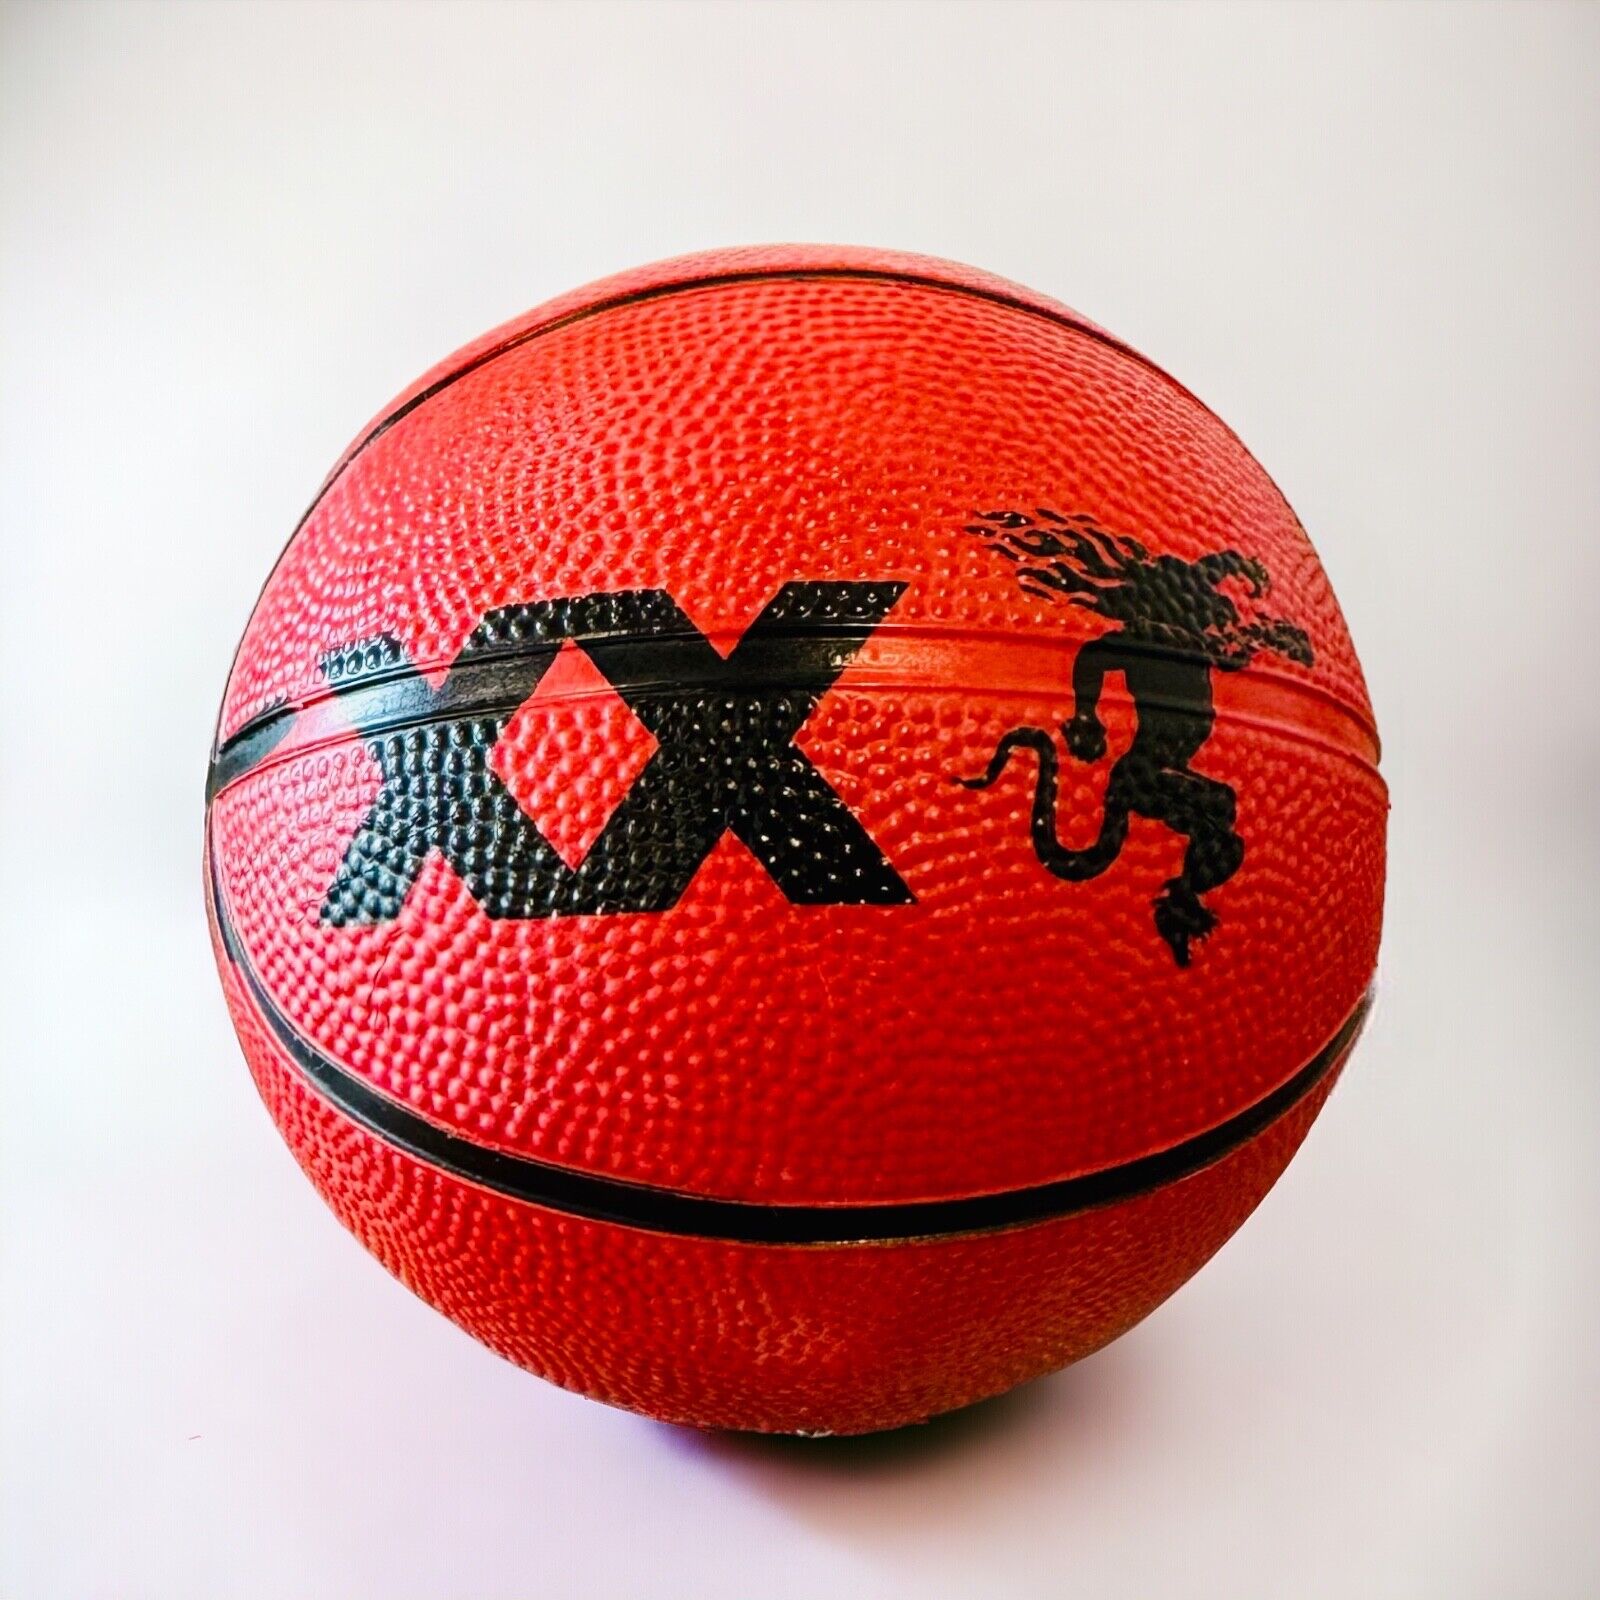 SKLZ Pro Mini Hoop Basketball - Orange Fireball X Dos Equis March Madness